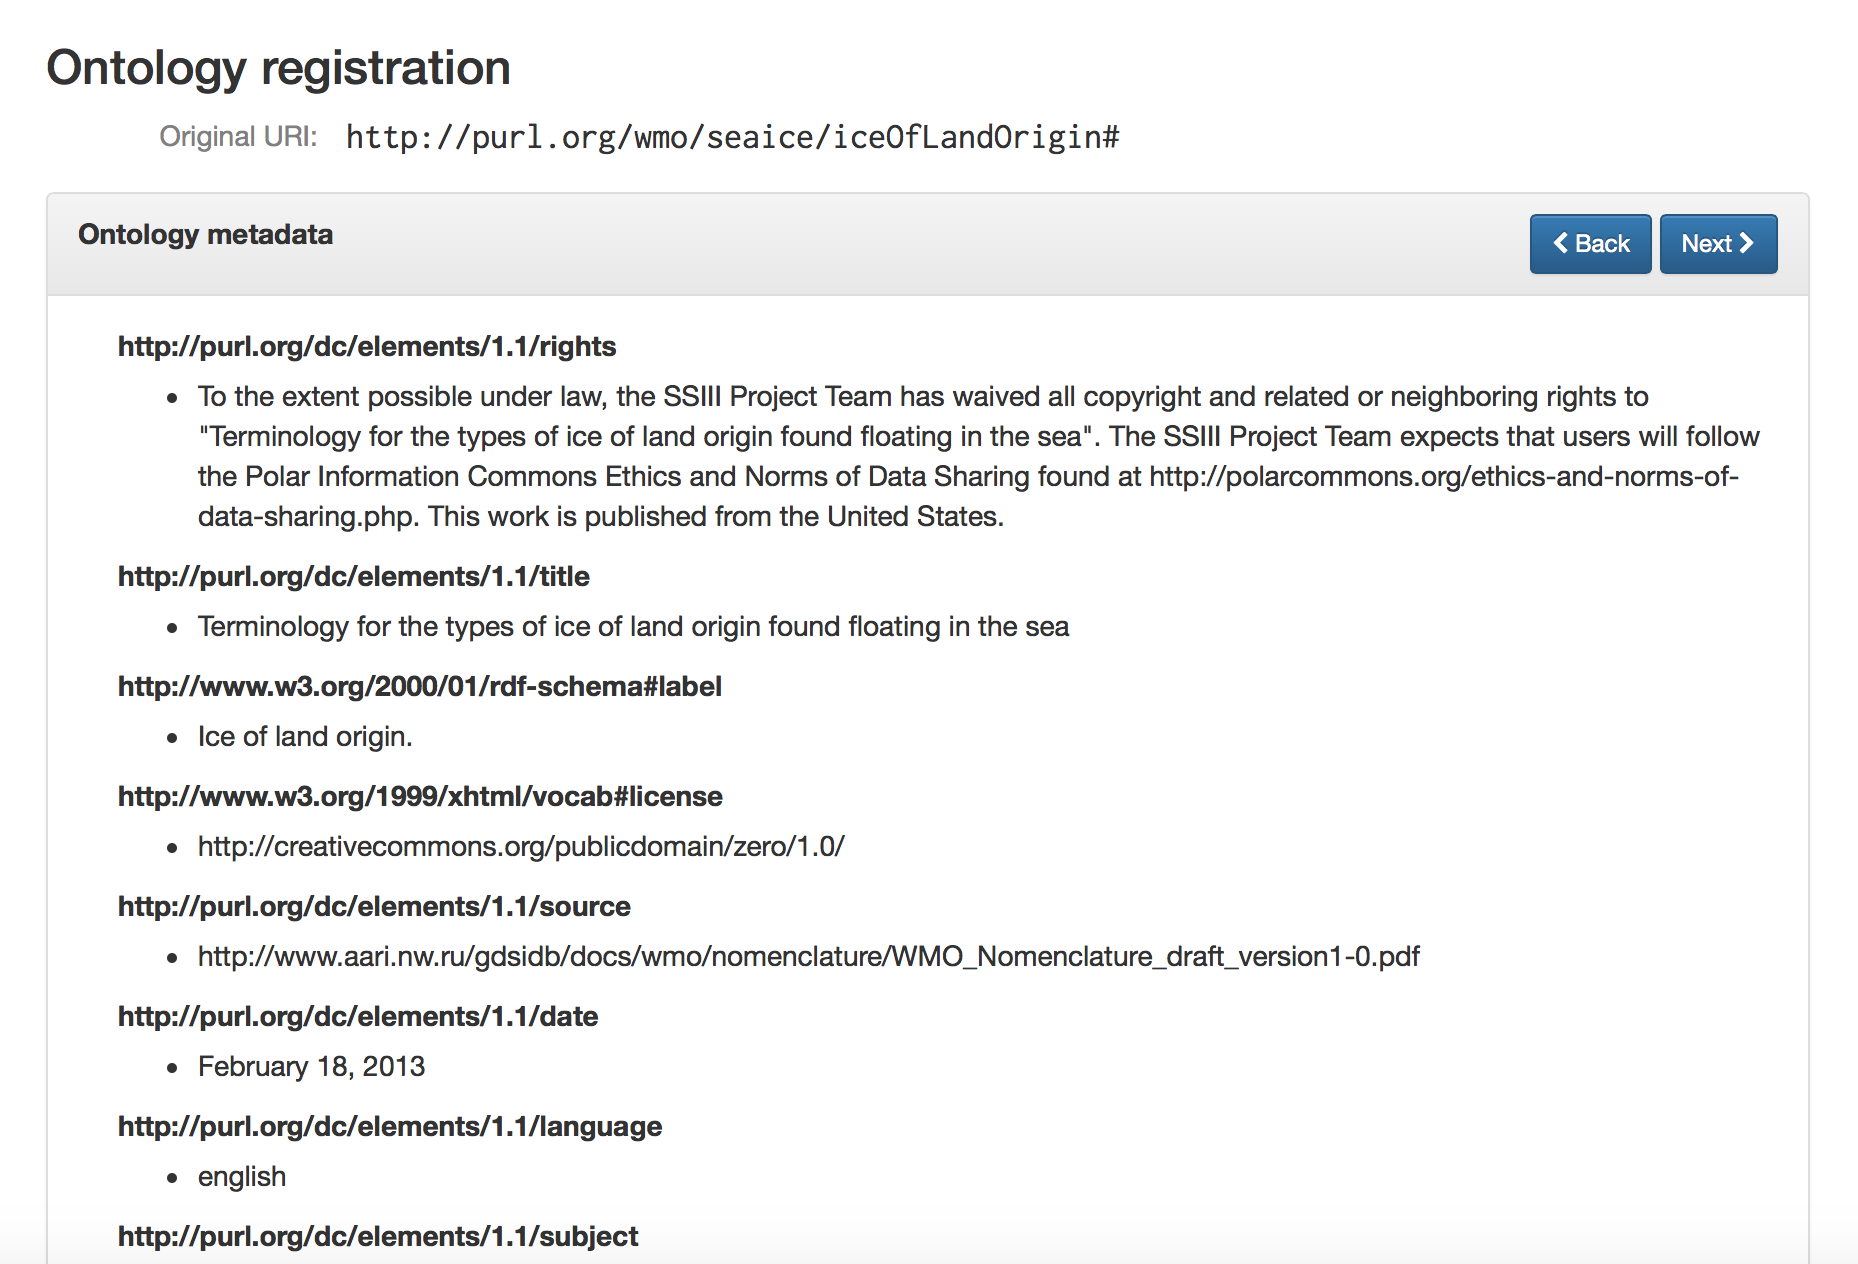 Ontology registration metadata